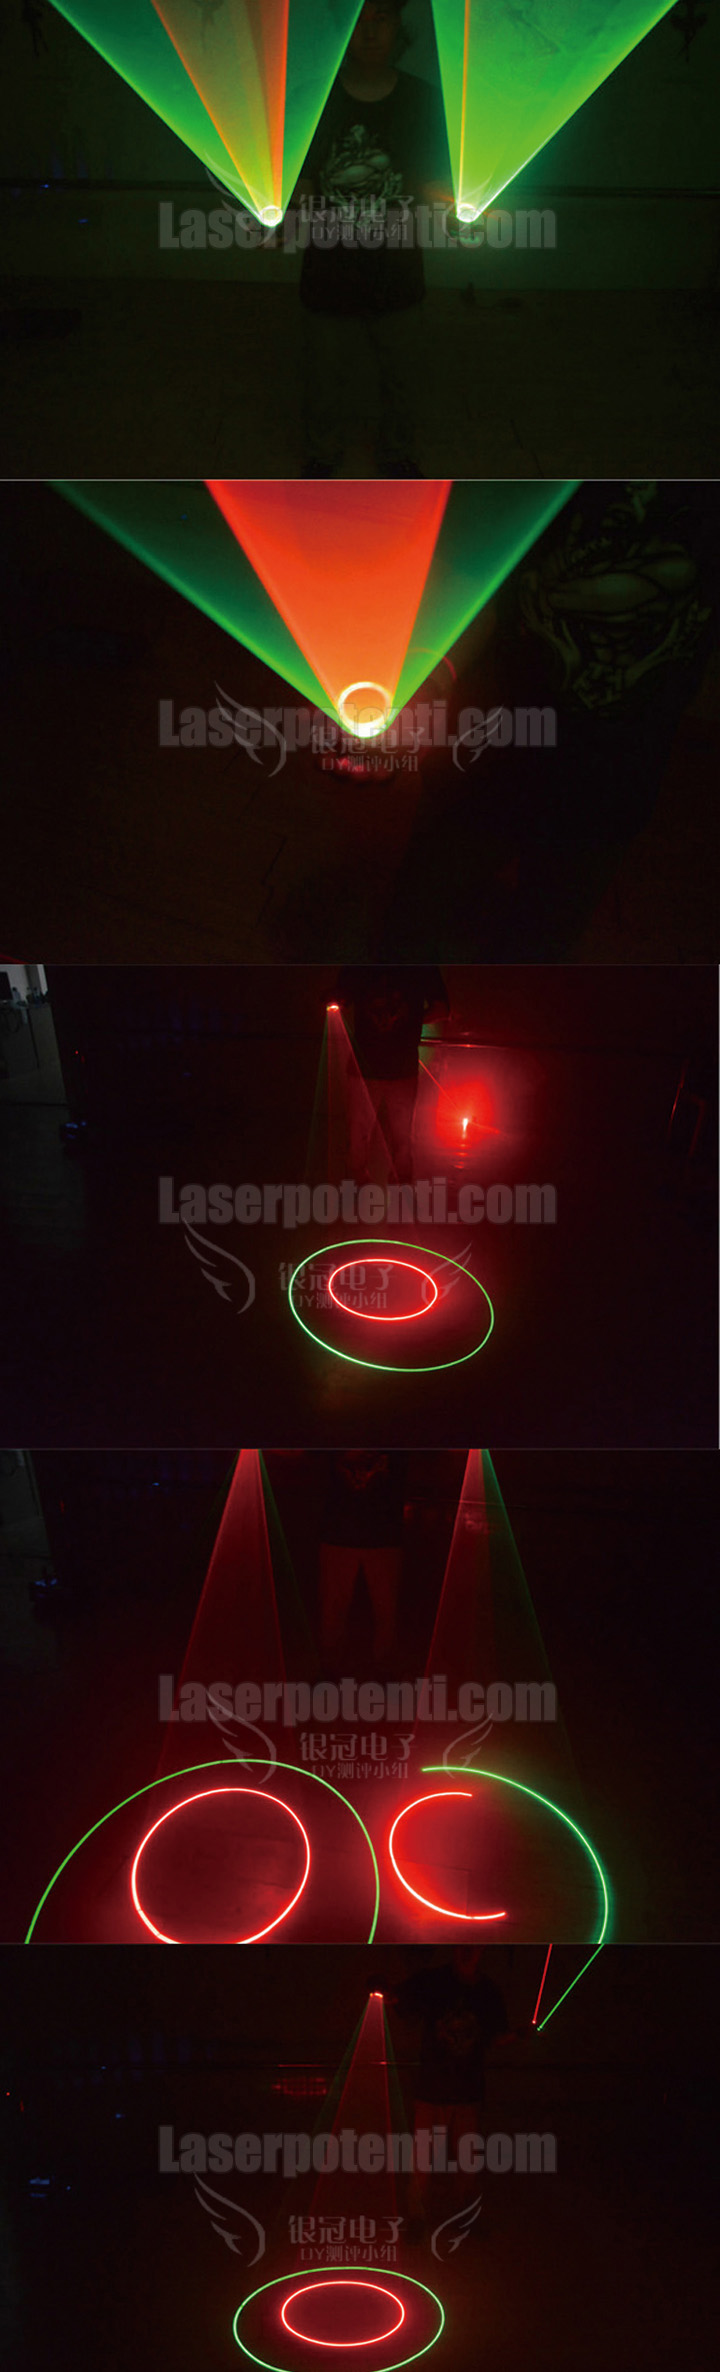 guanto laser